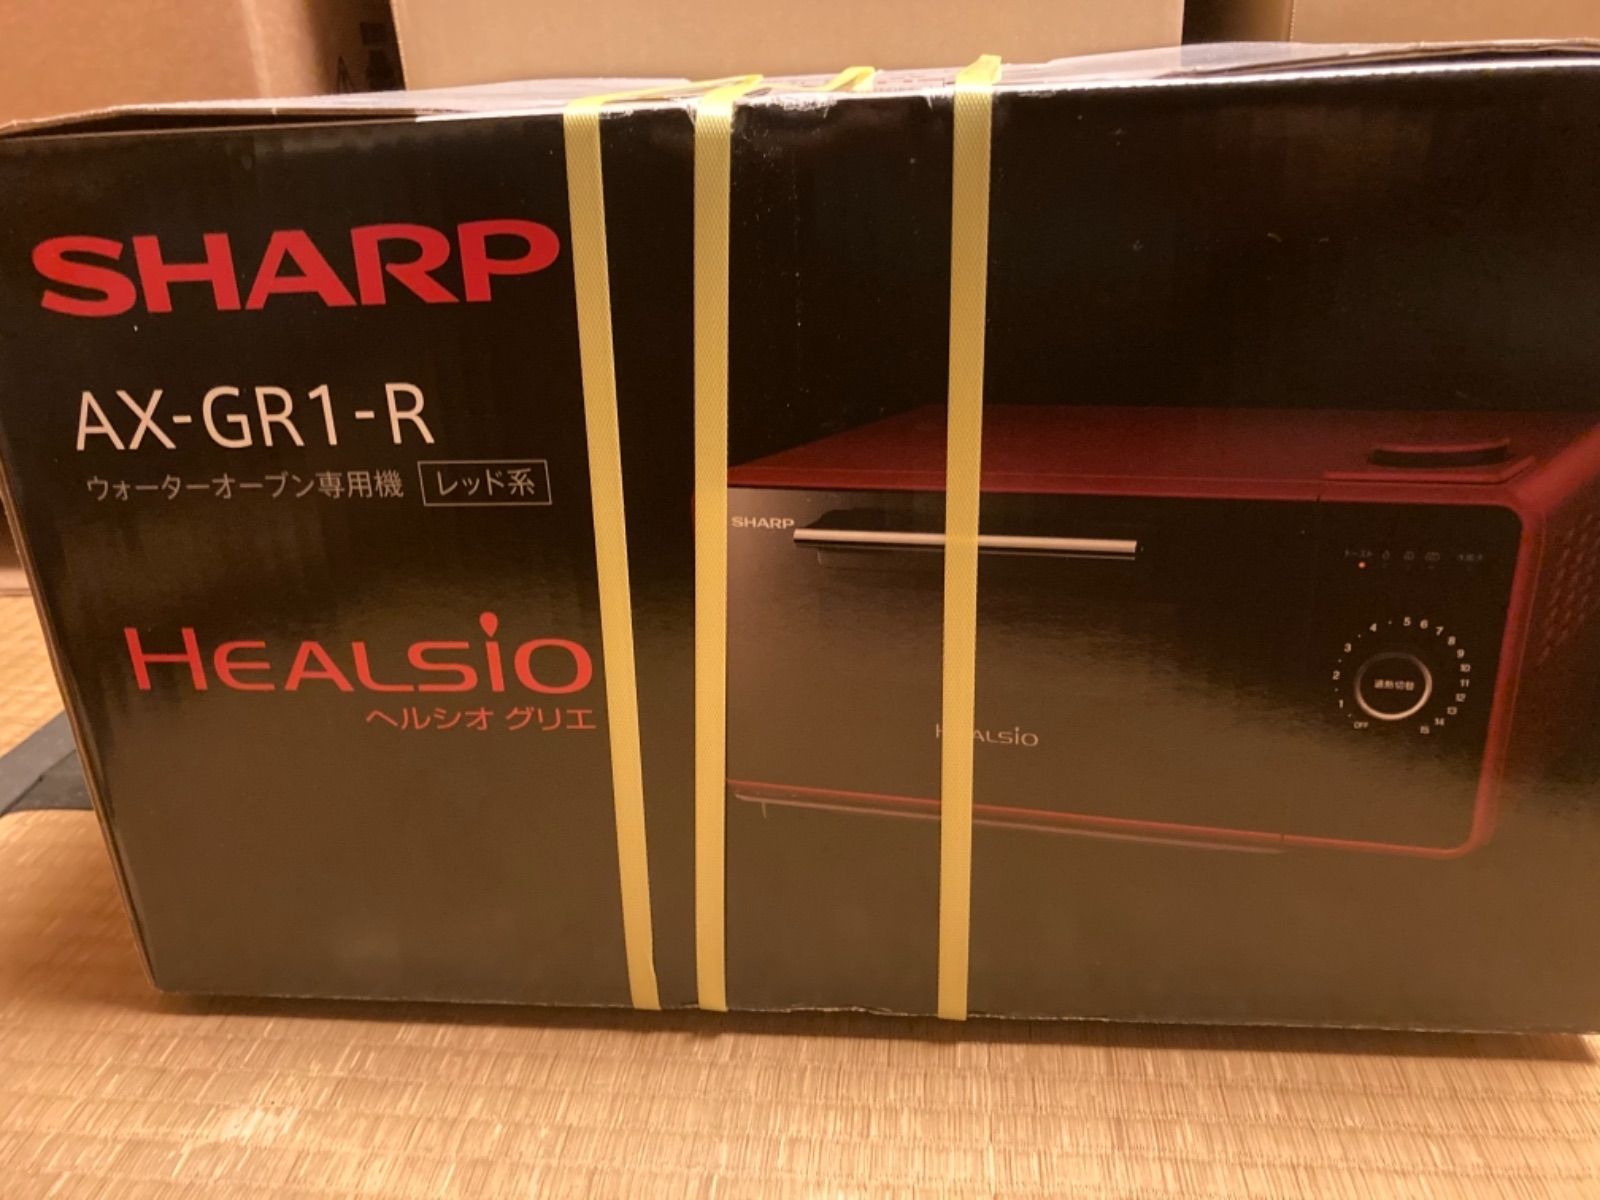 SHARP AX-GR1-R ヘルシオ グリエ - メルカリ